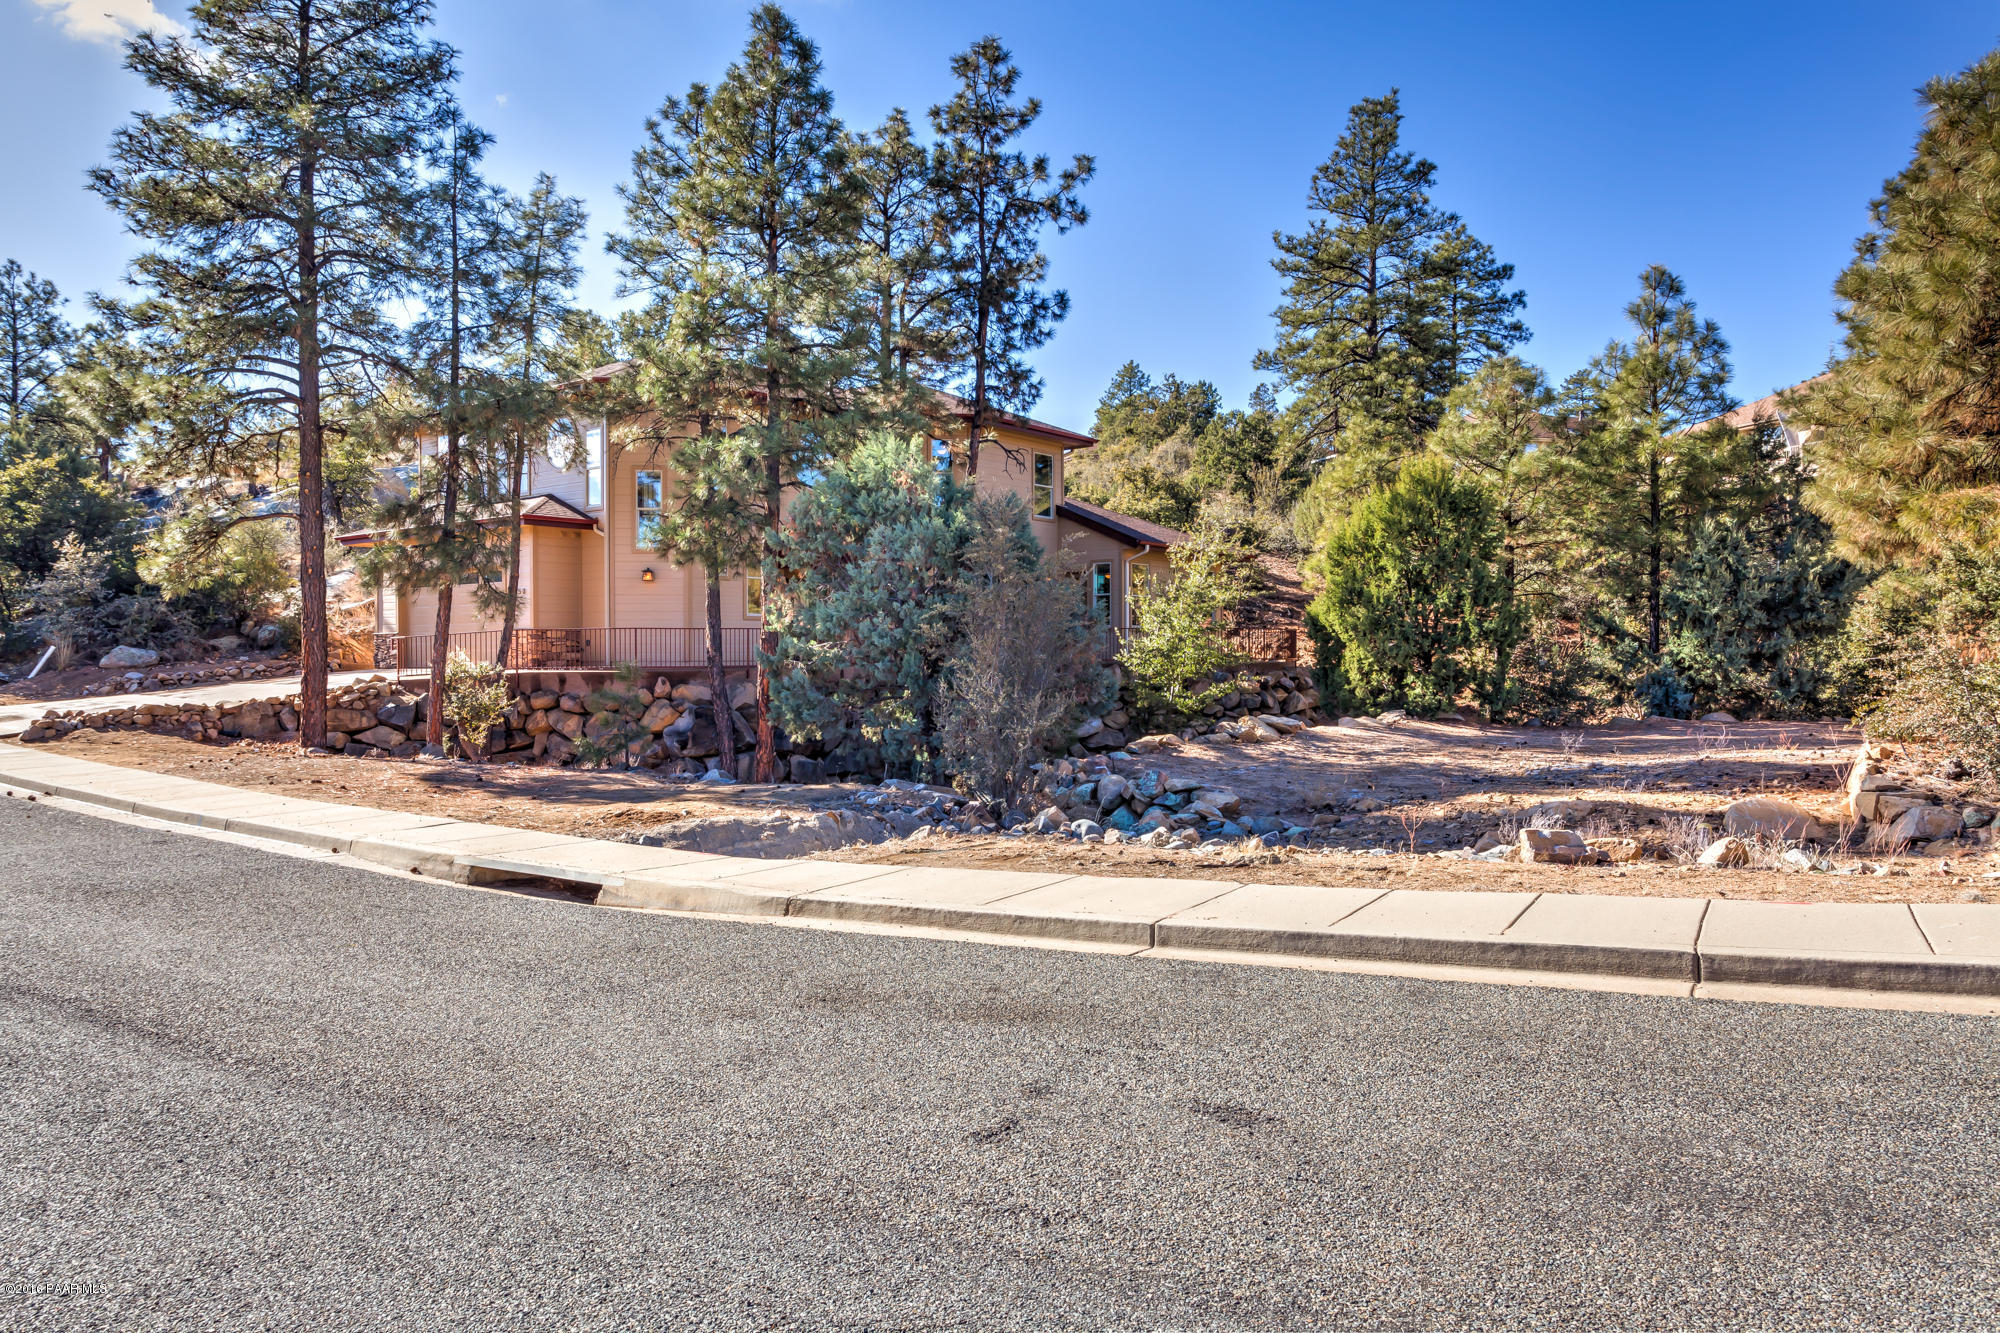 Copper Canyon New Homes for Sale in Prescott Arizona